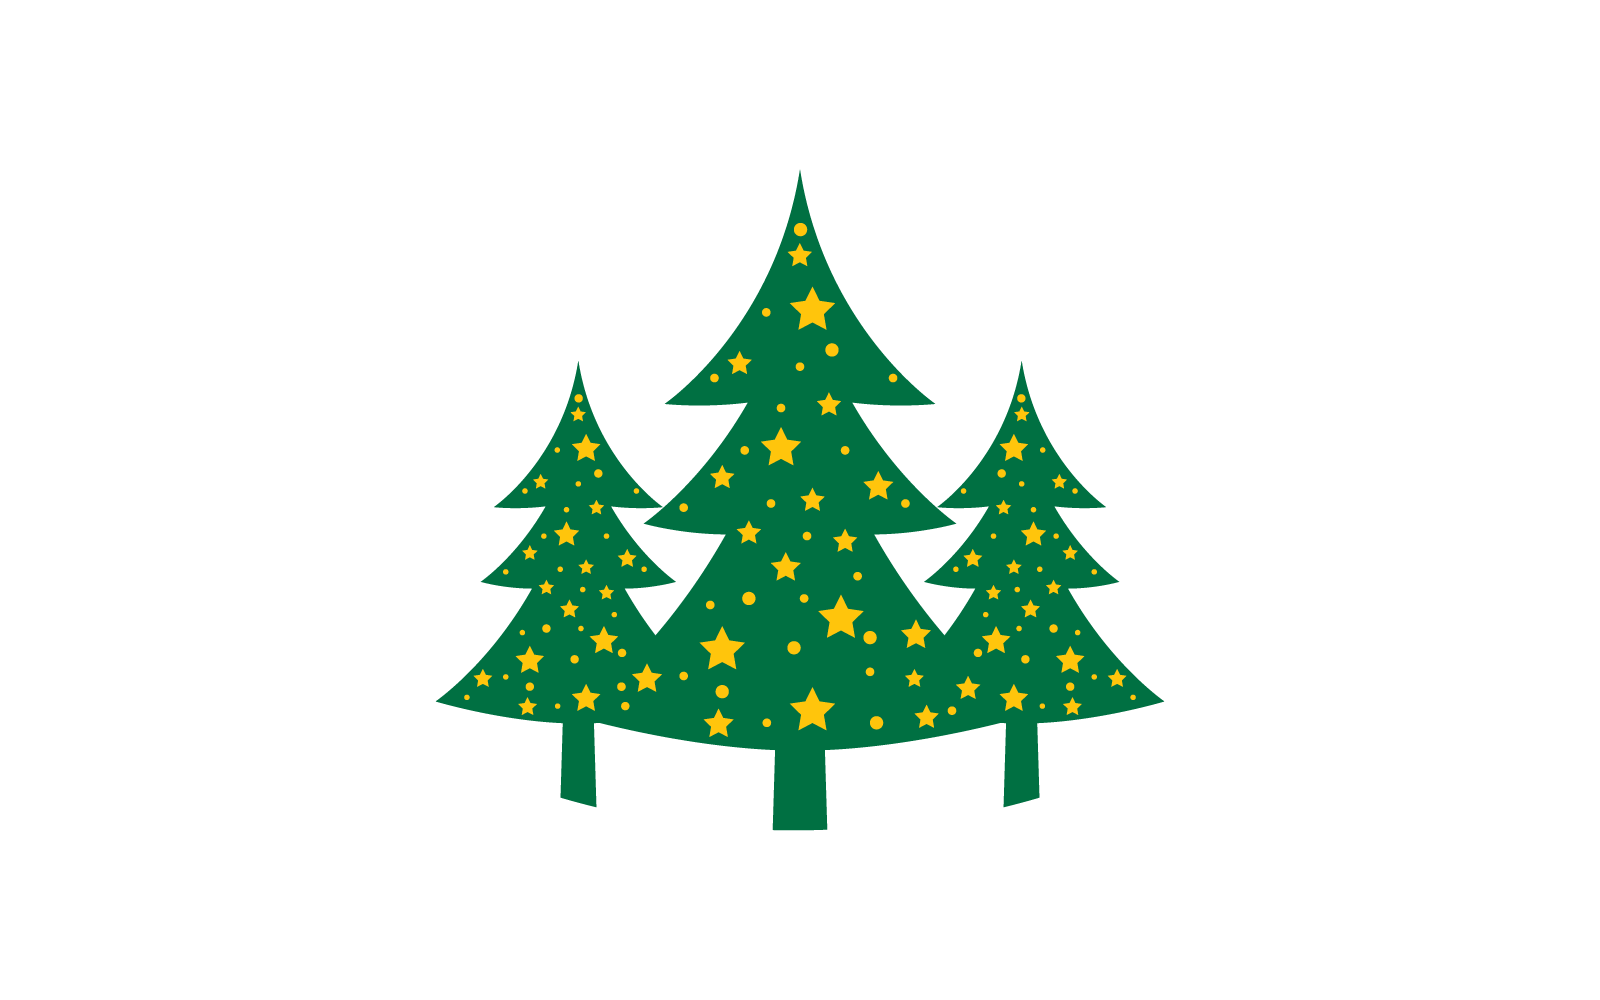 Pine tree illustration vector flat design